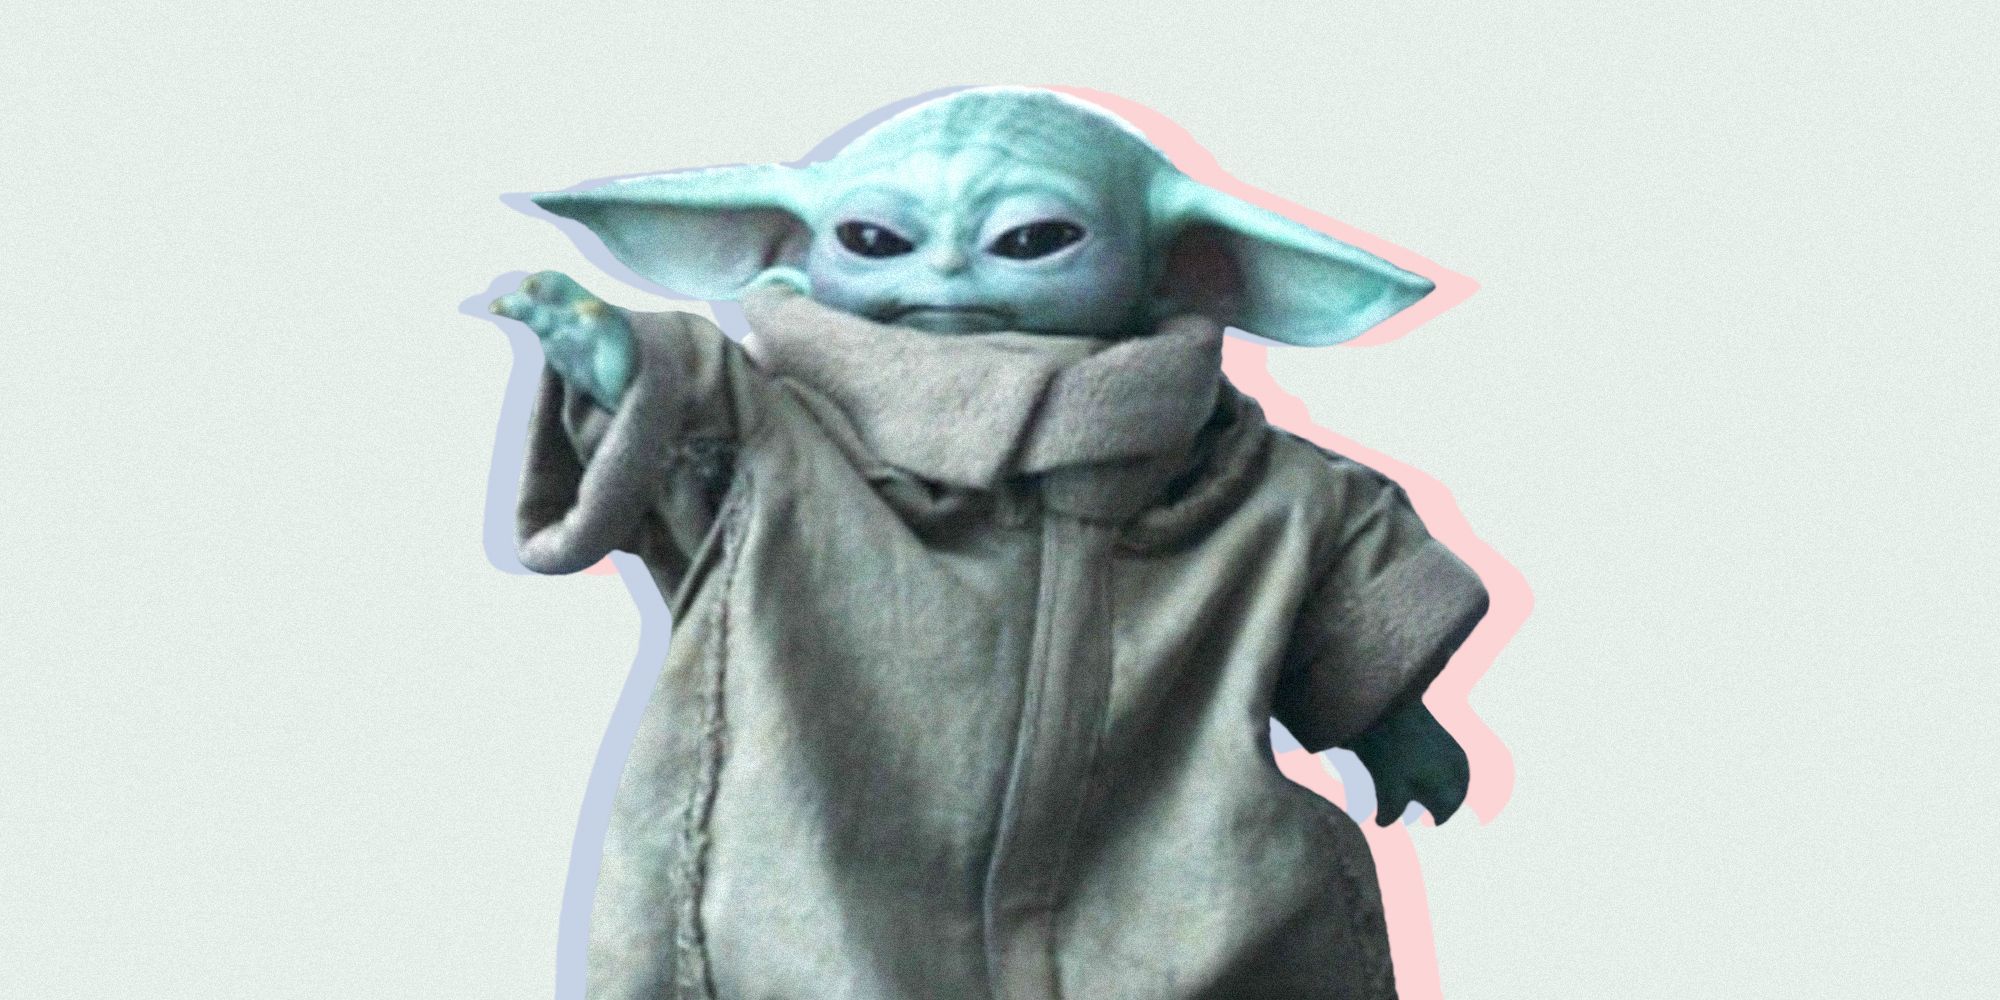 The Mandalorian Season 2 Theory Says Baby Yoda Is the Next Star Wars Villain